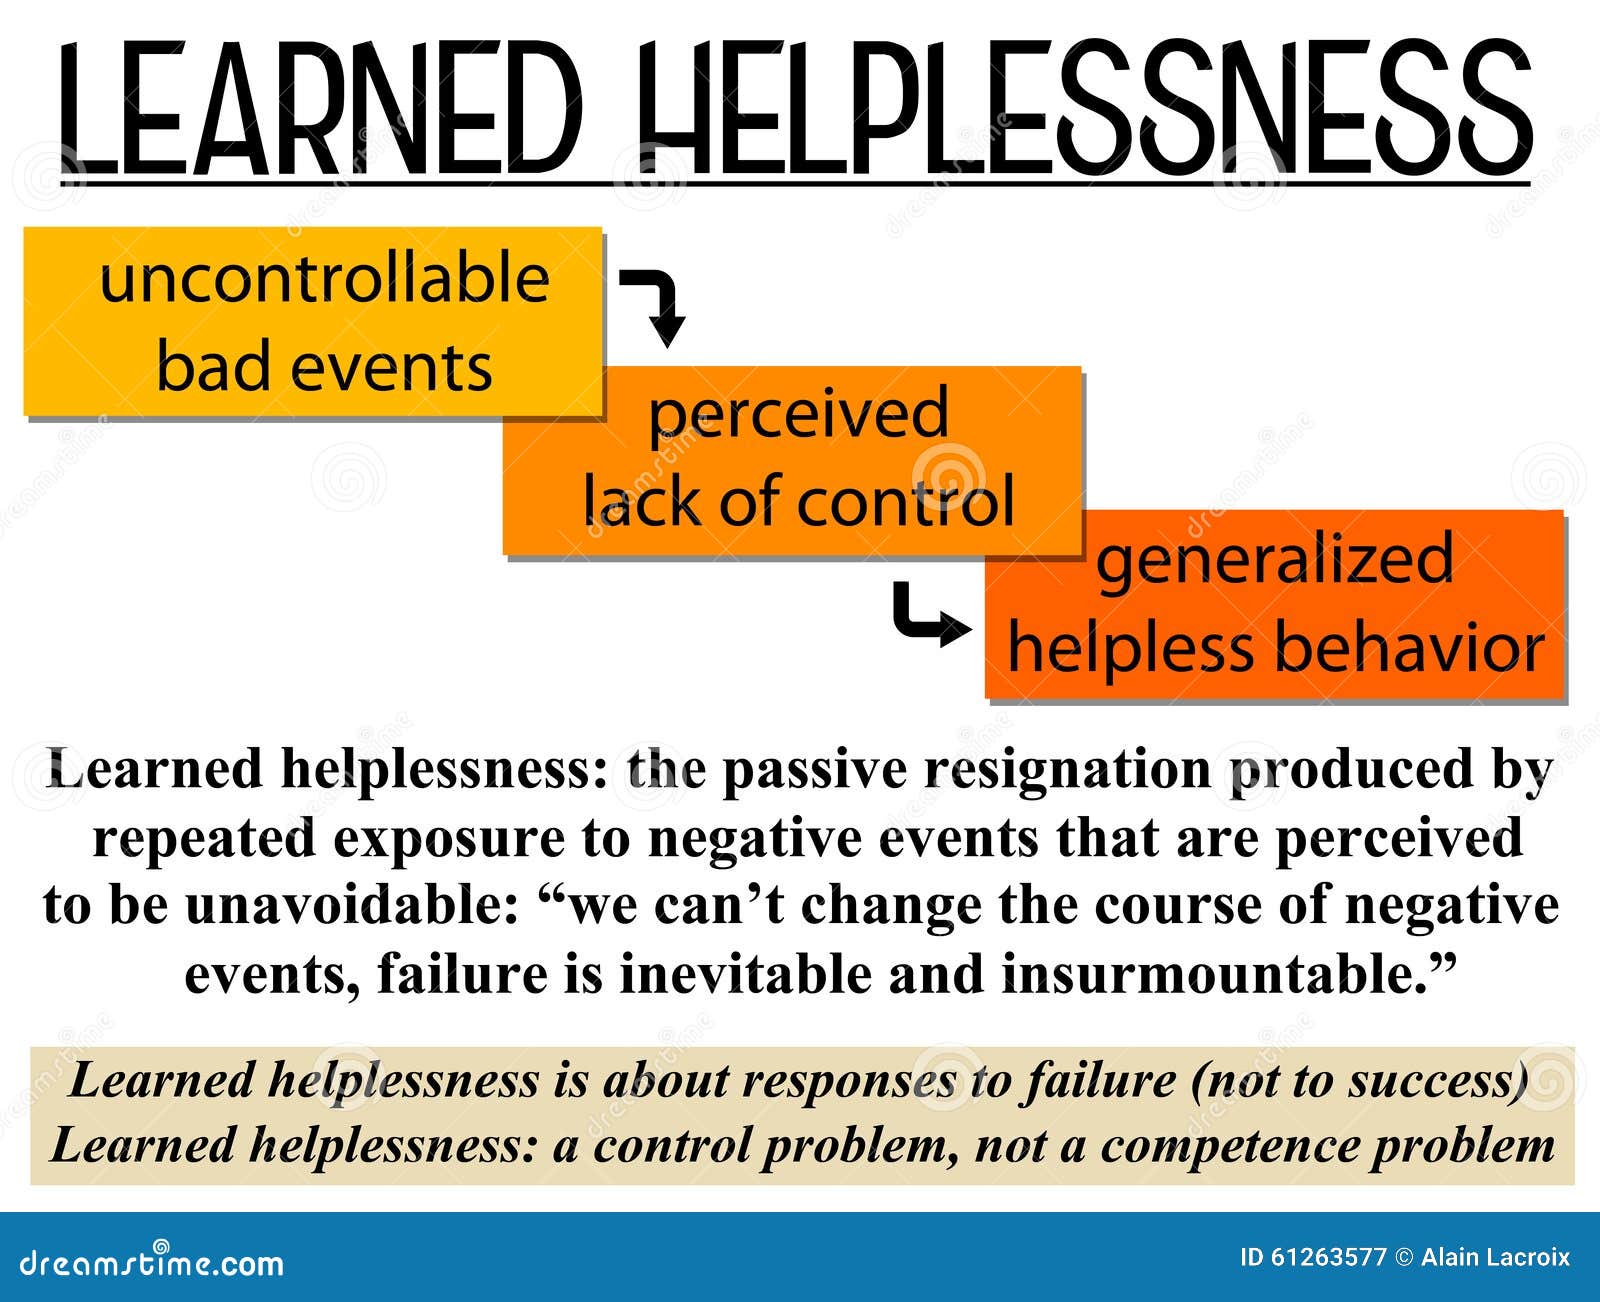 learned helplessness